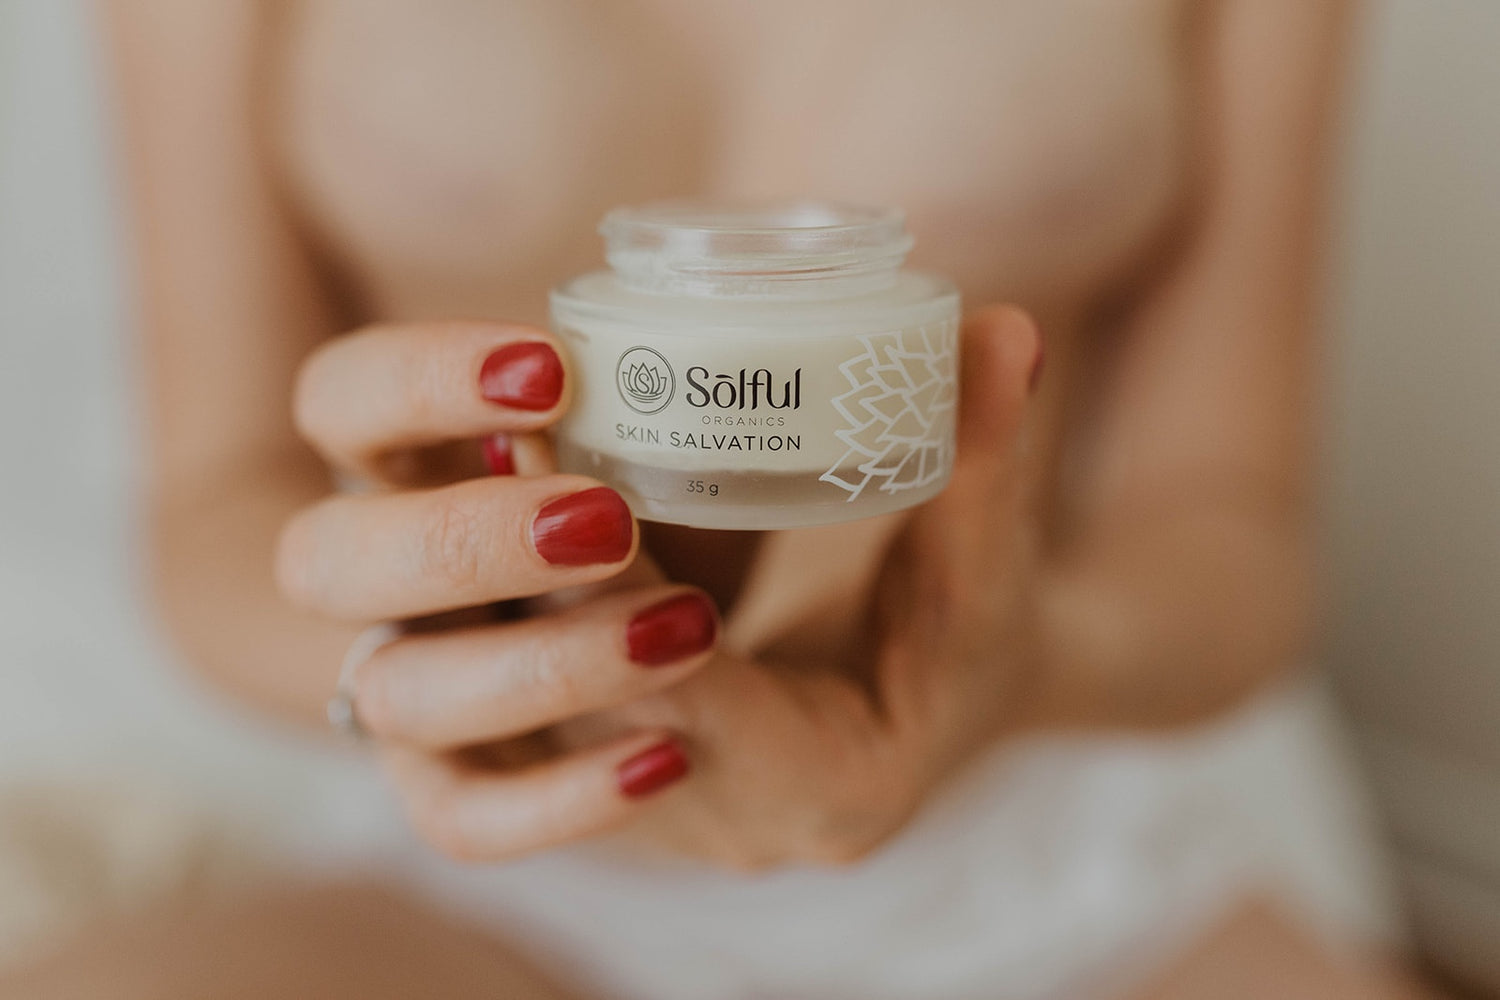 Skin salvation, natural healing salve, from Solful Organics